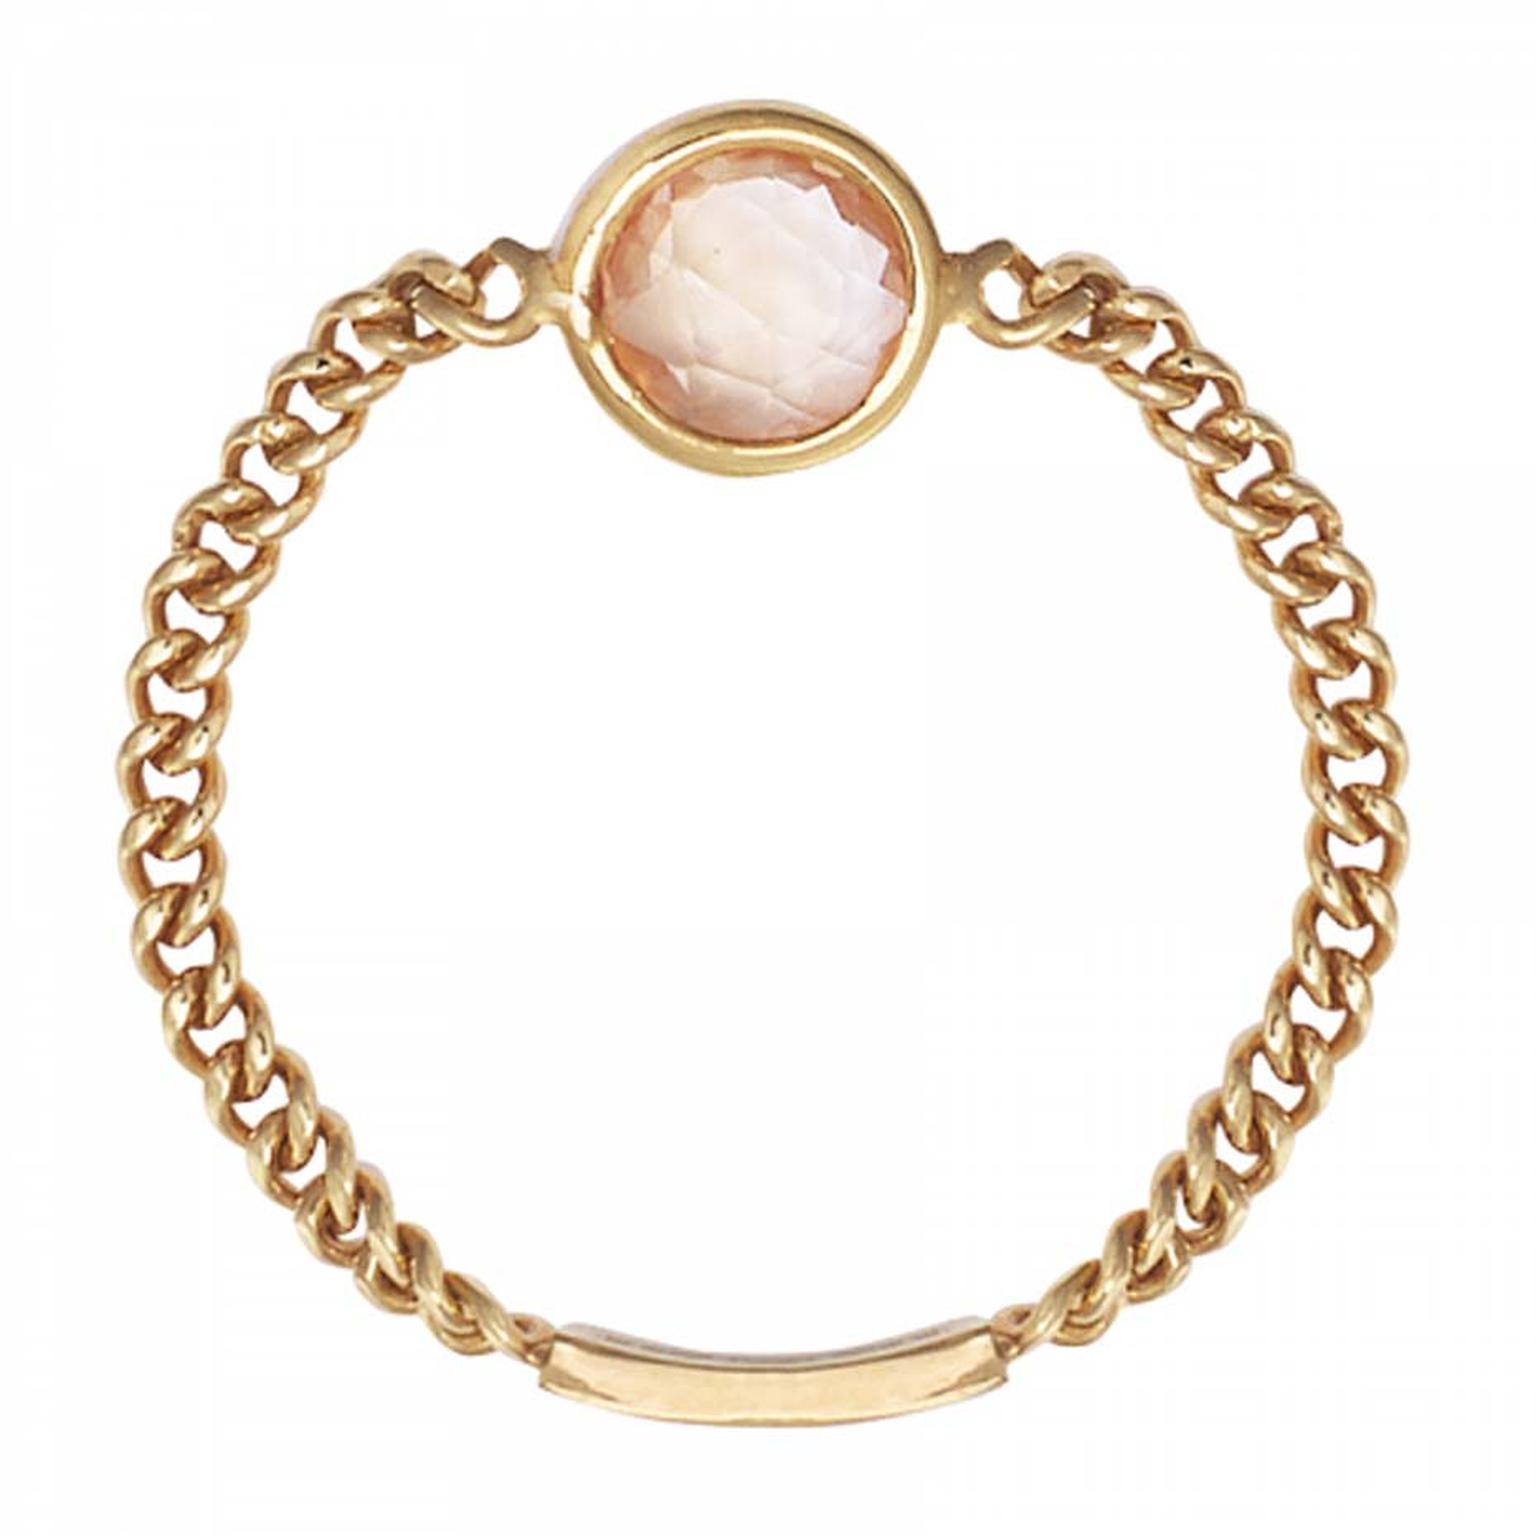 Sweet Pea rose-cut peach sapphire Chain ring in gold.